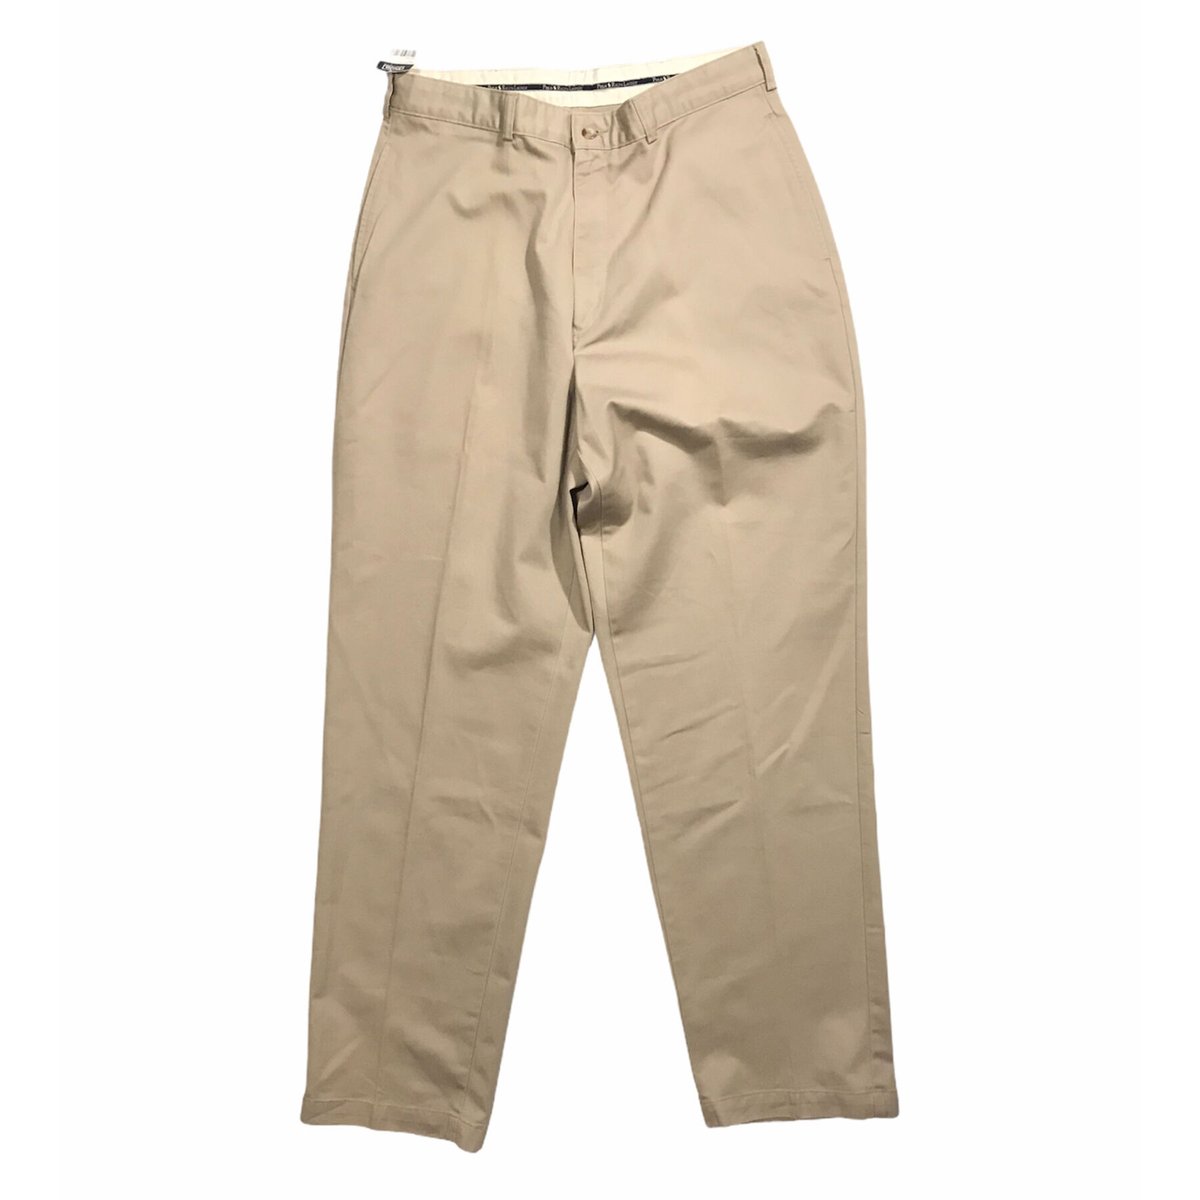 New Polo Ralph Lauren CHINO Pants Size w34 L30